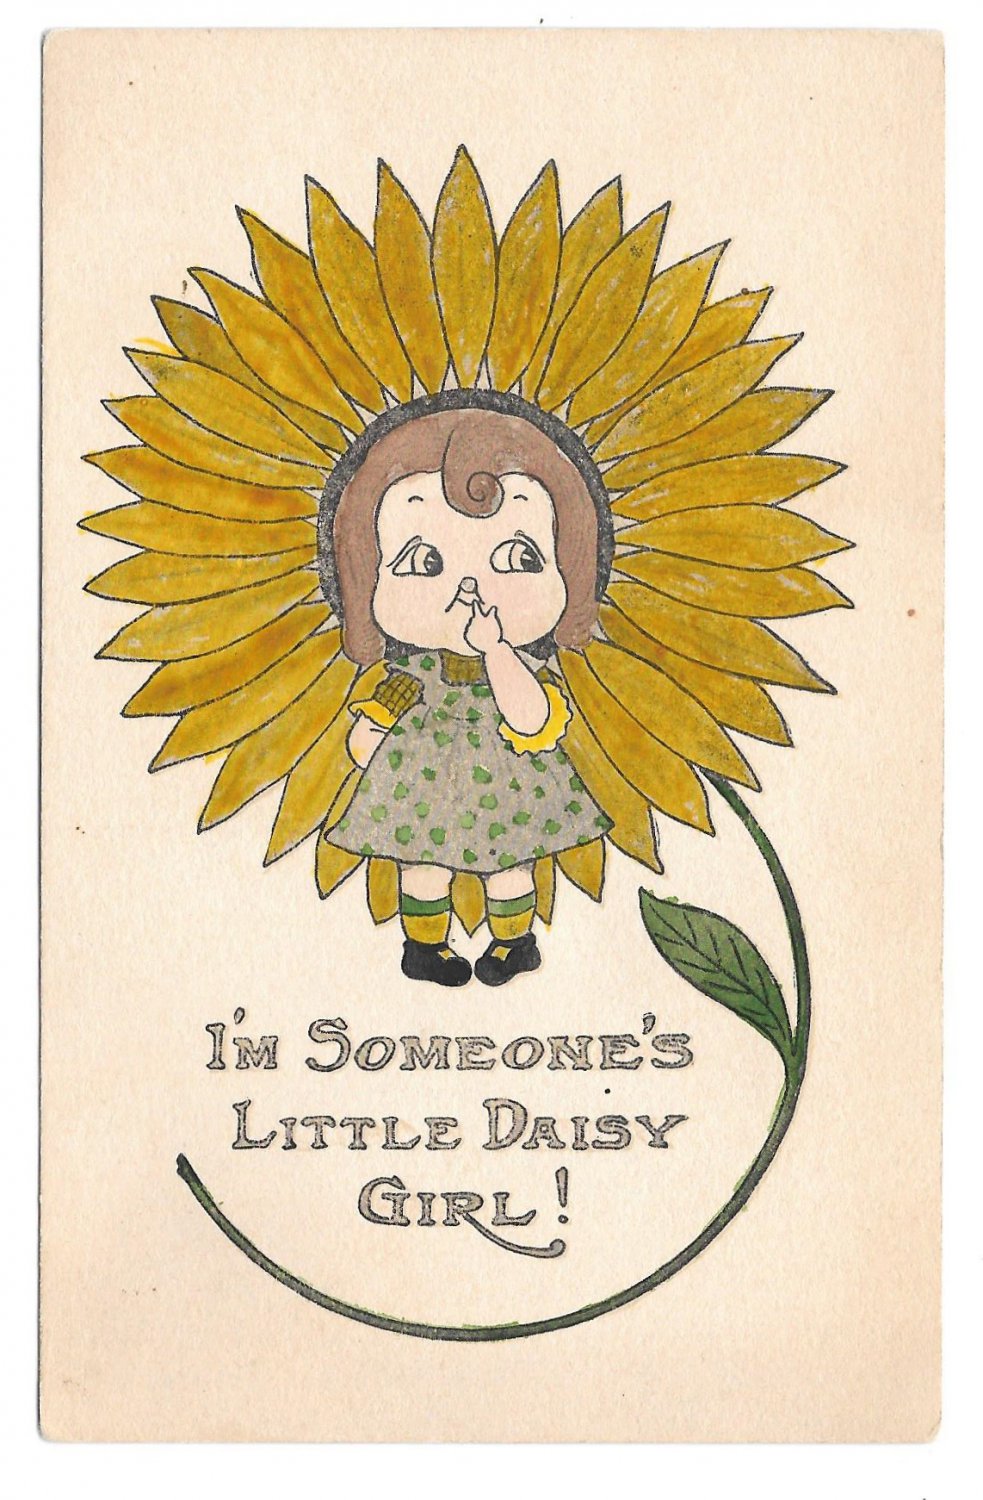 Little daisy only fans